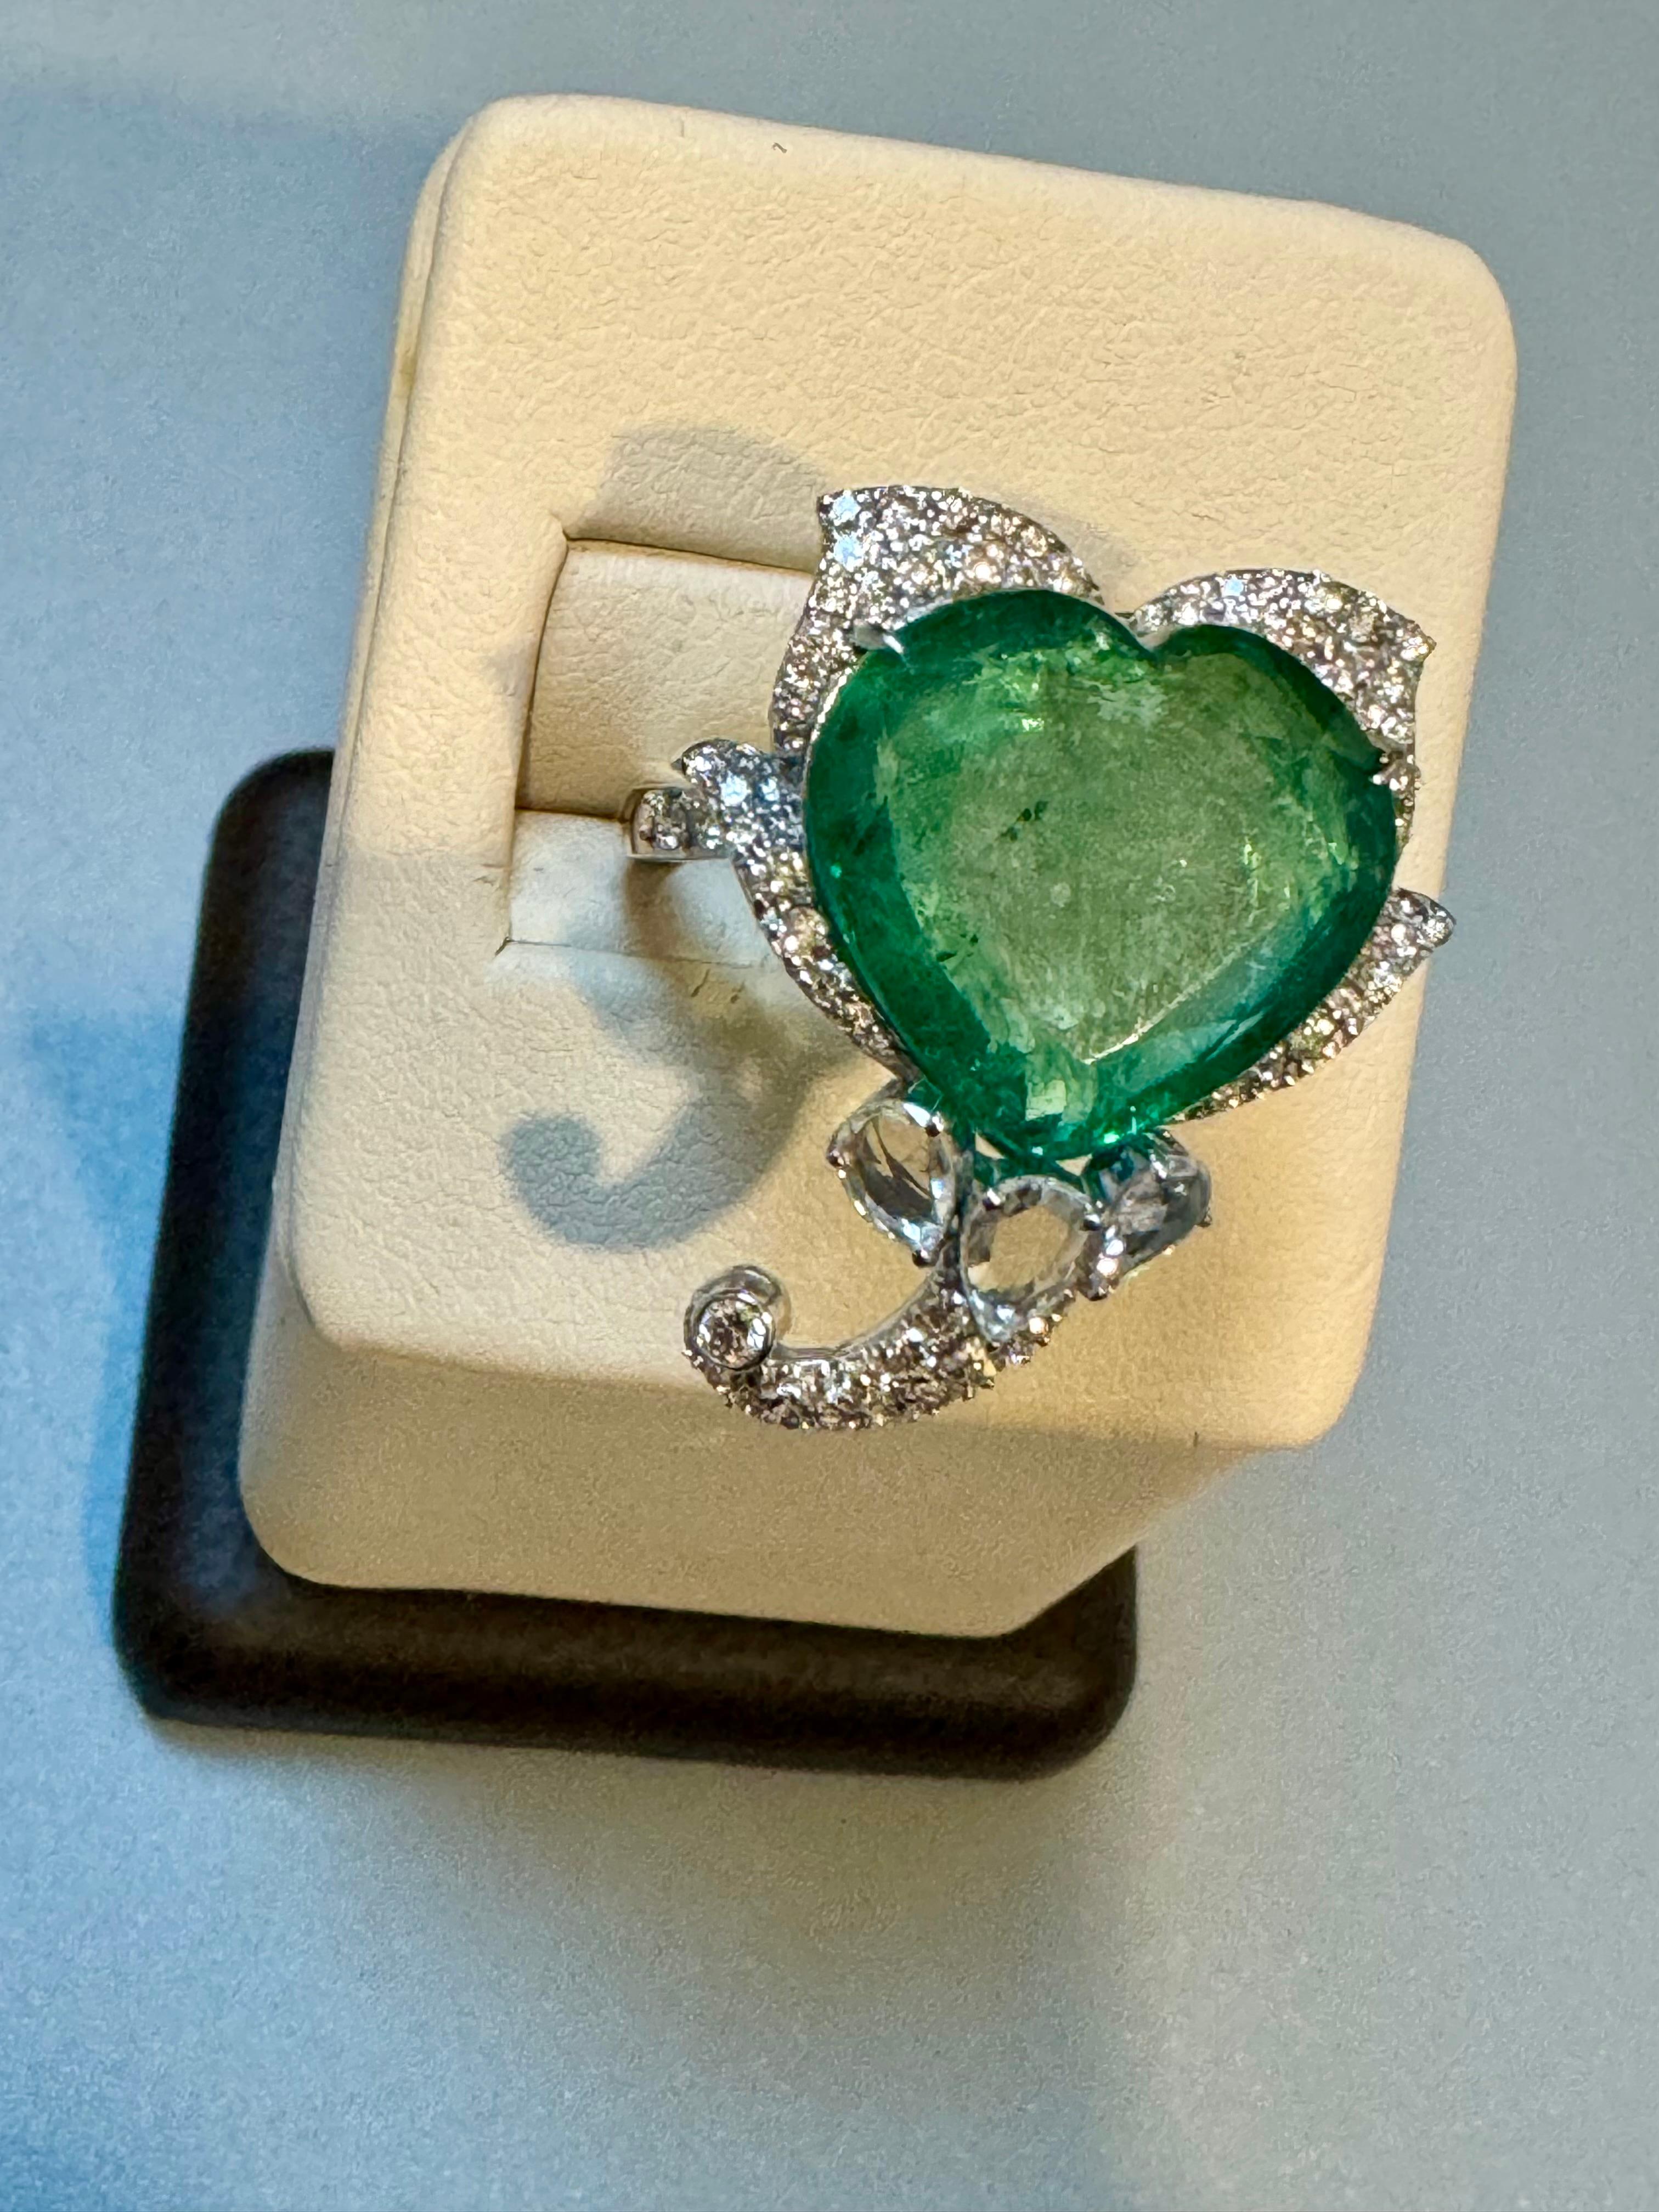 13 Ct  Zambian Heart Cut Emerald & 1.5 Ct Diamond Ring, 18 Kt Gold Size 8.5  For Sale 5